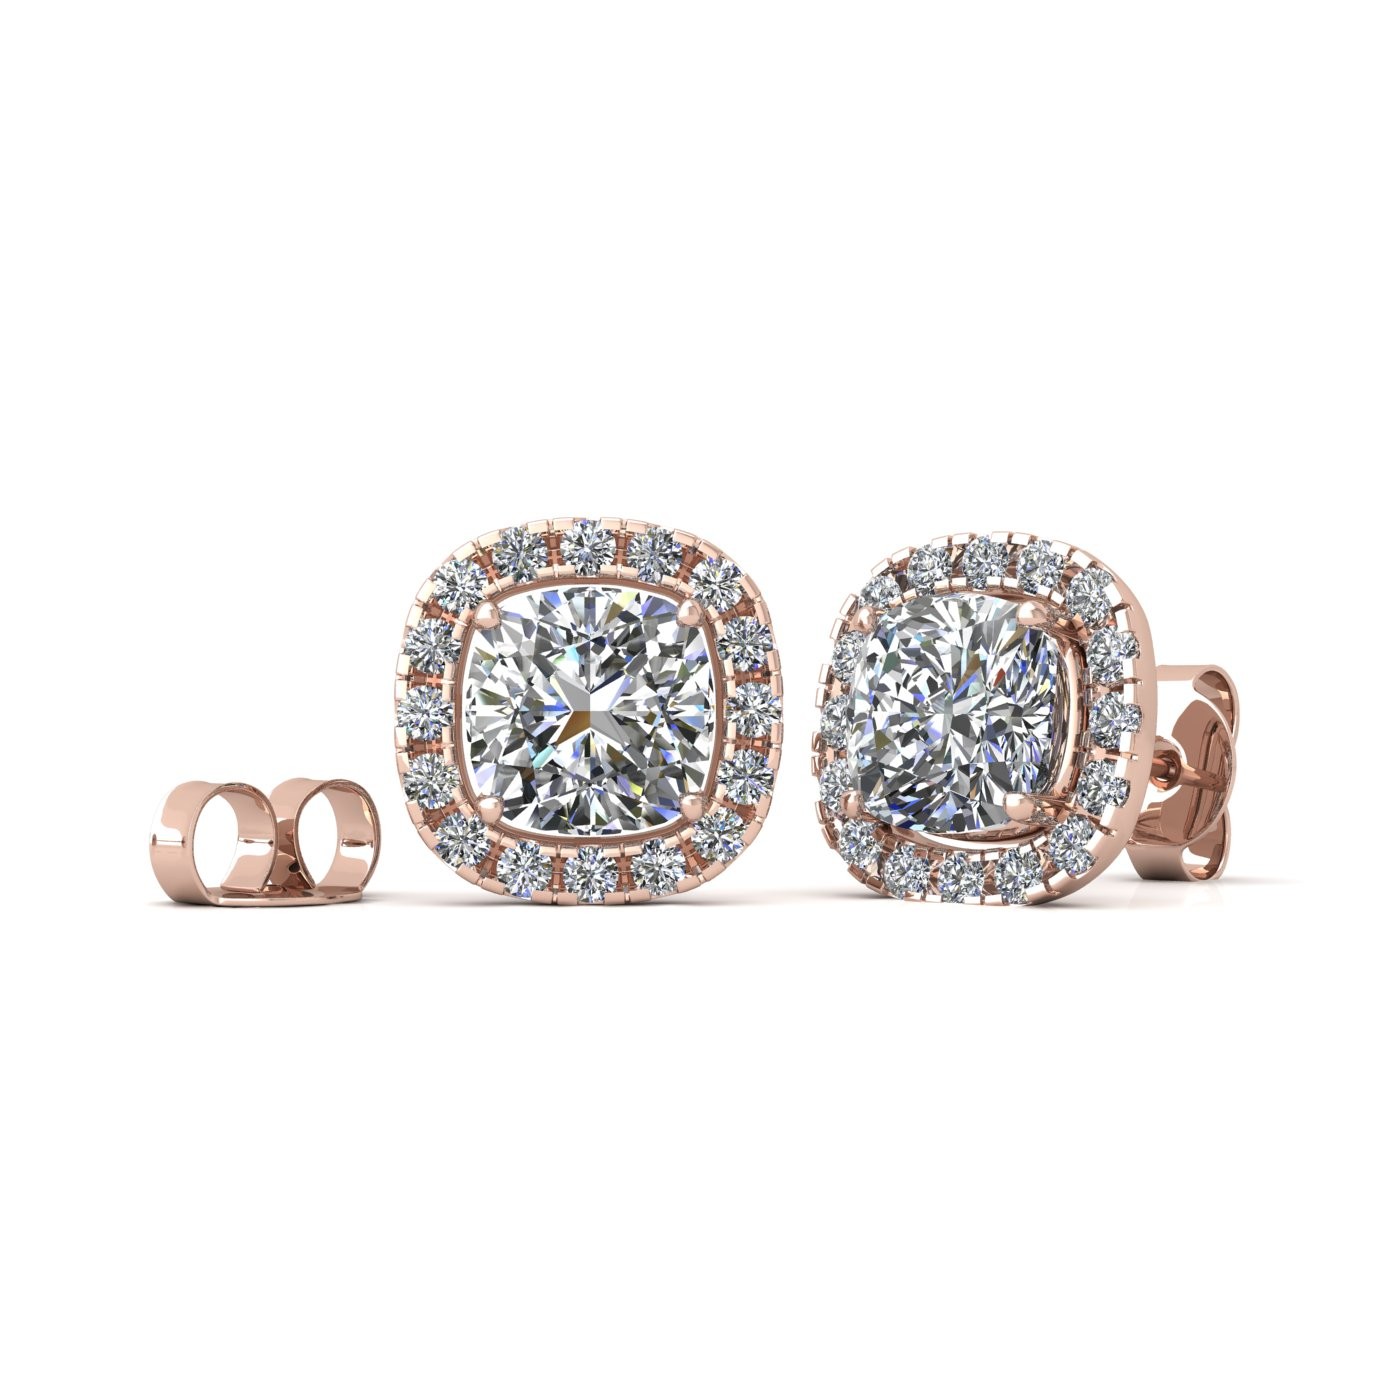 18k rose gold  0,7 ct each (1,4 tcw) 4 prongs cushion shape diamond earrings with diamond pavÉ set halo